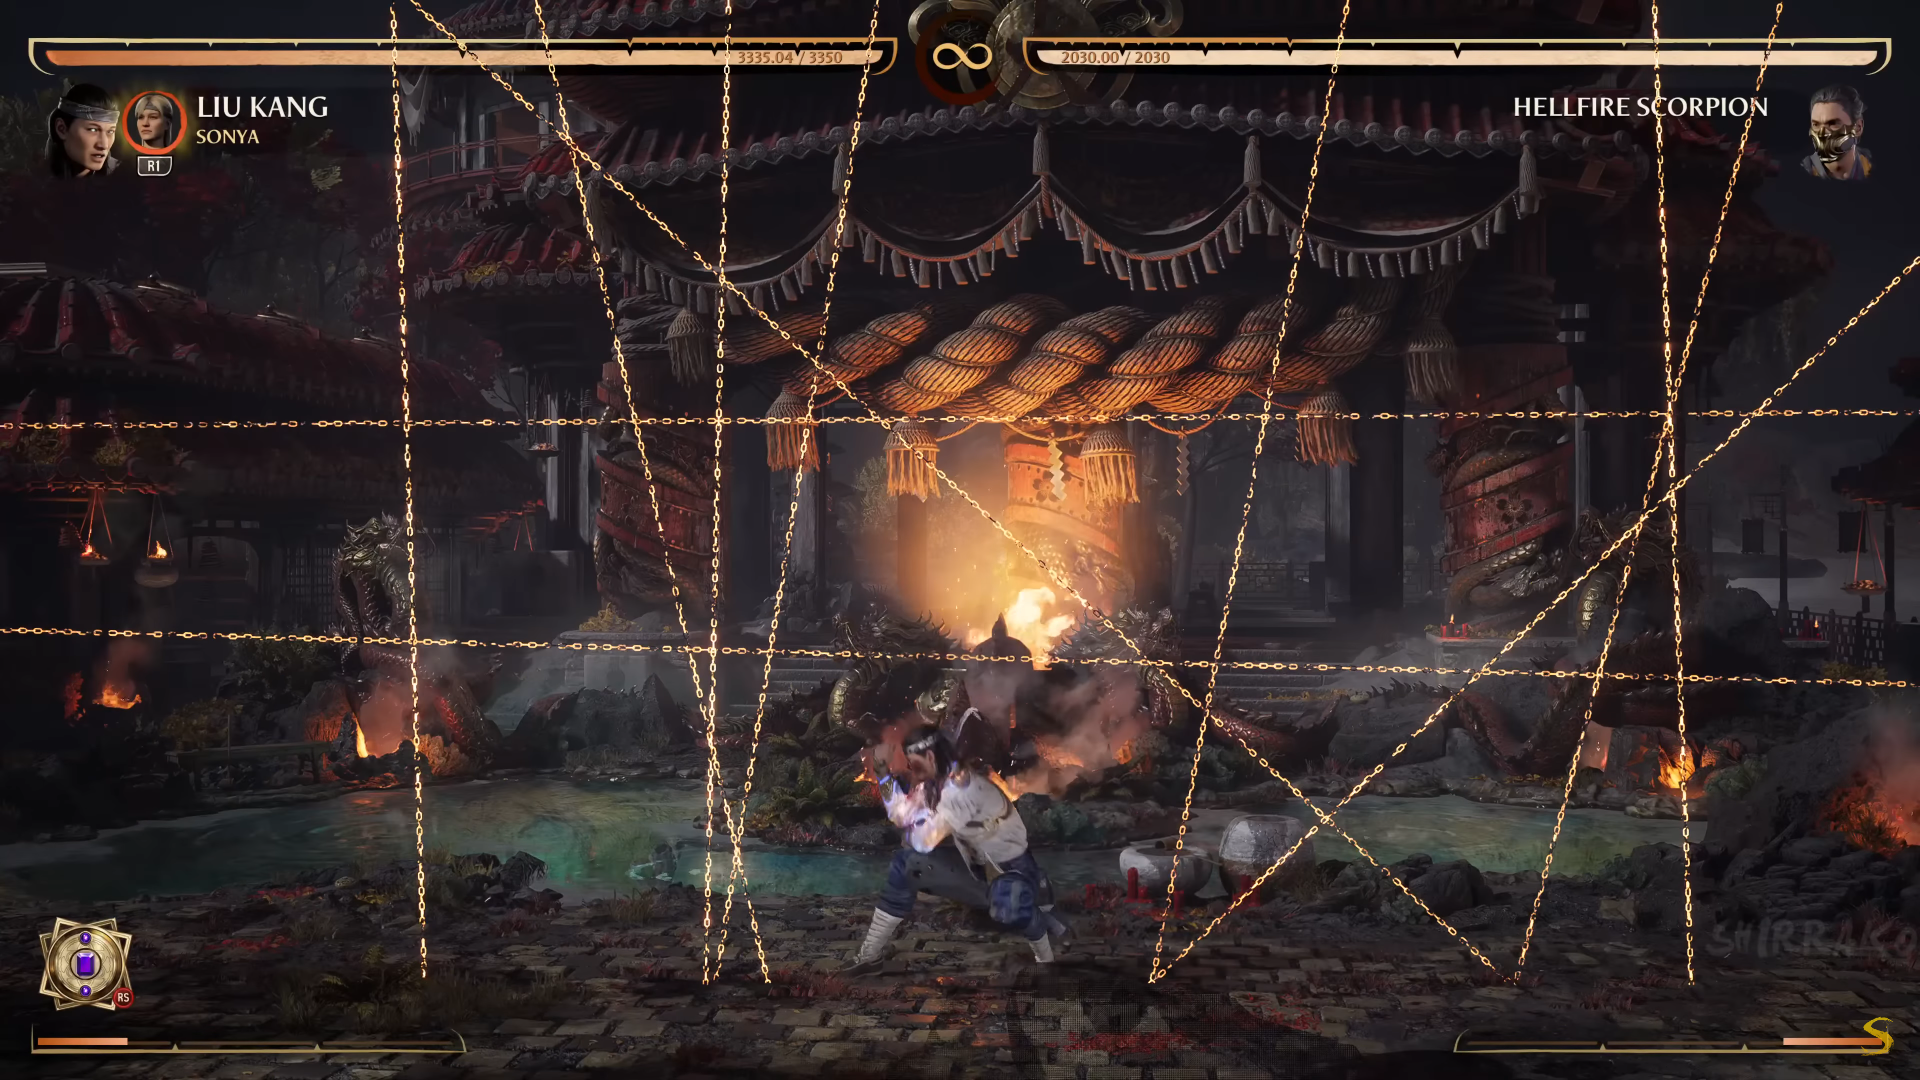 A screenshot of phase 3 of the Hellfire Scorpion boss fight in Mortal Kombat 1.